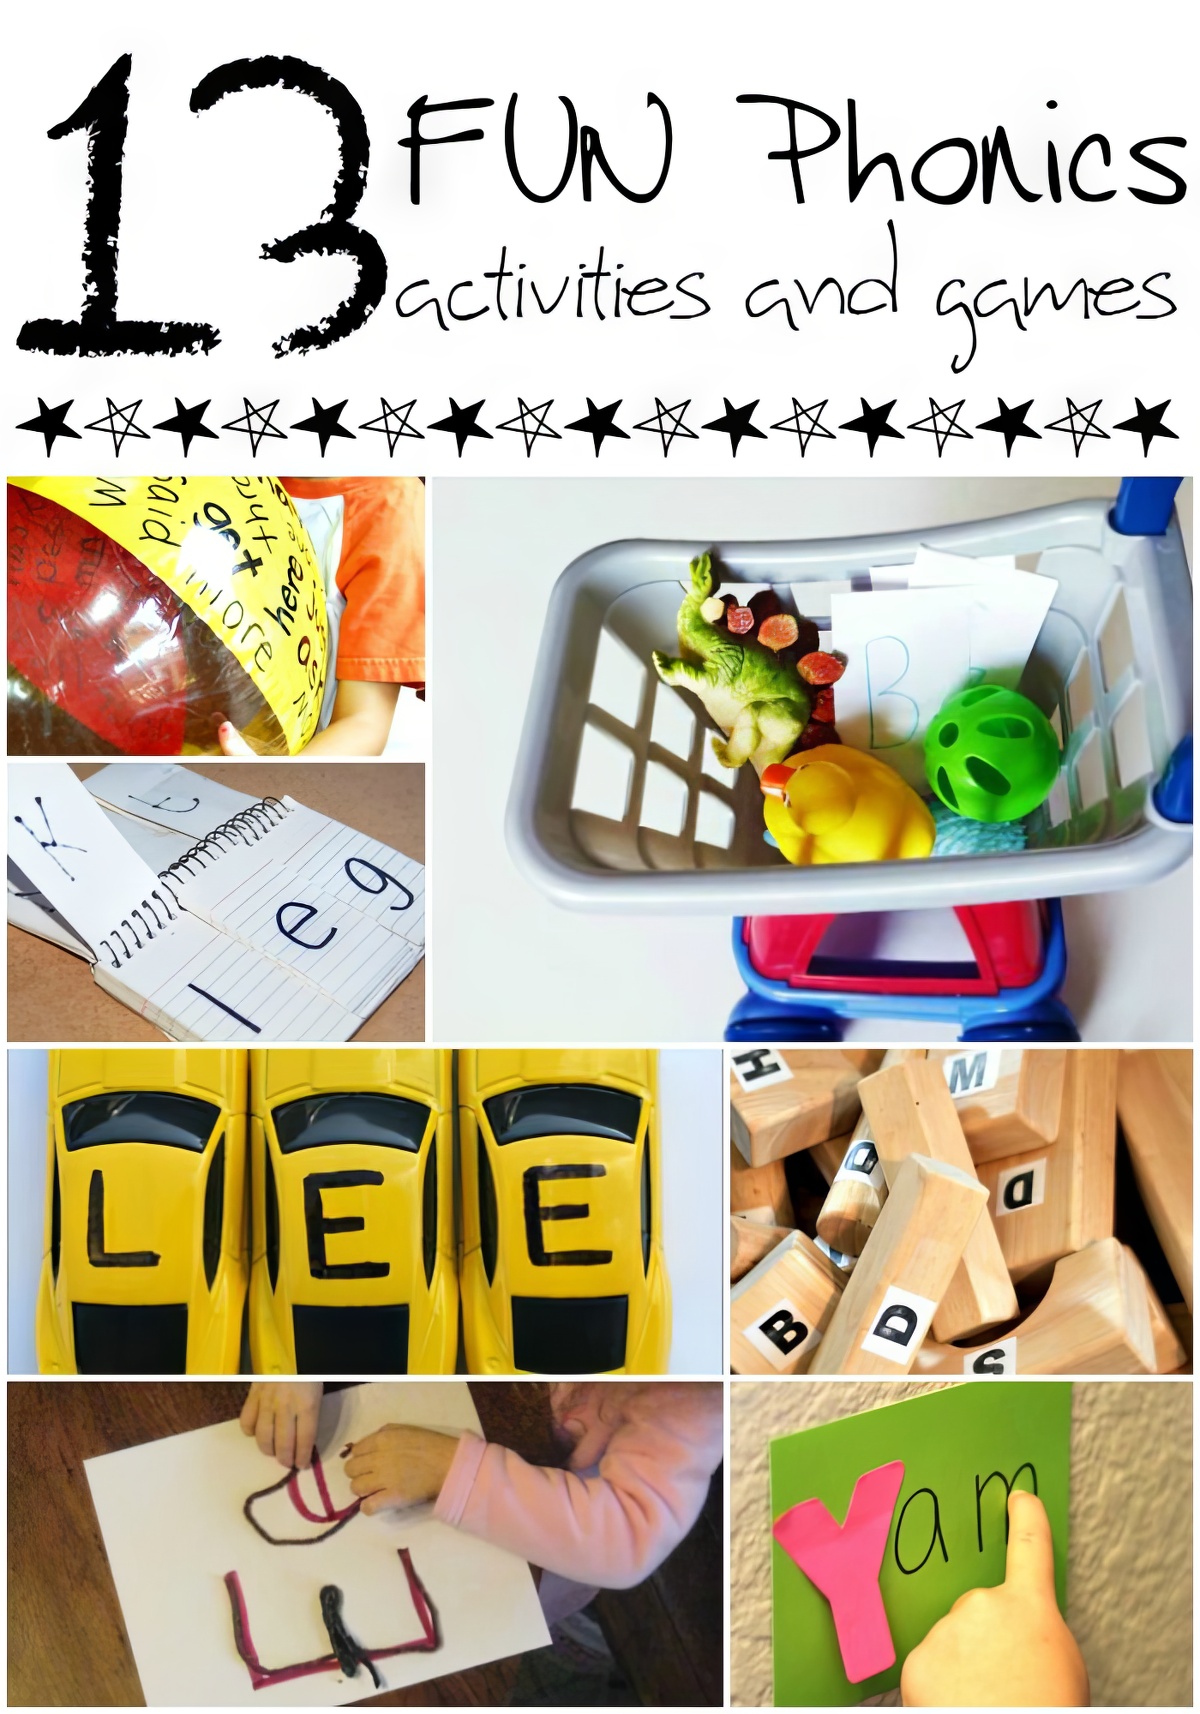 Fun Phonics Games and Activities,  Phonics Games and Activities for toddlers, phonics activities for your kids